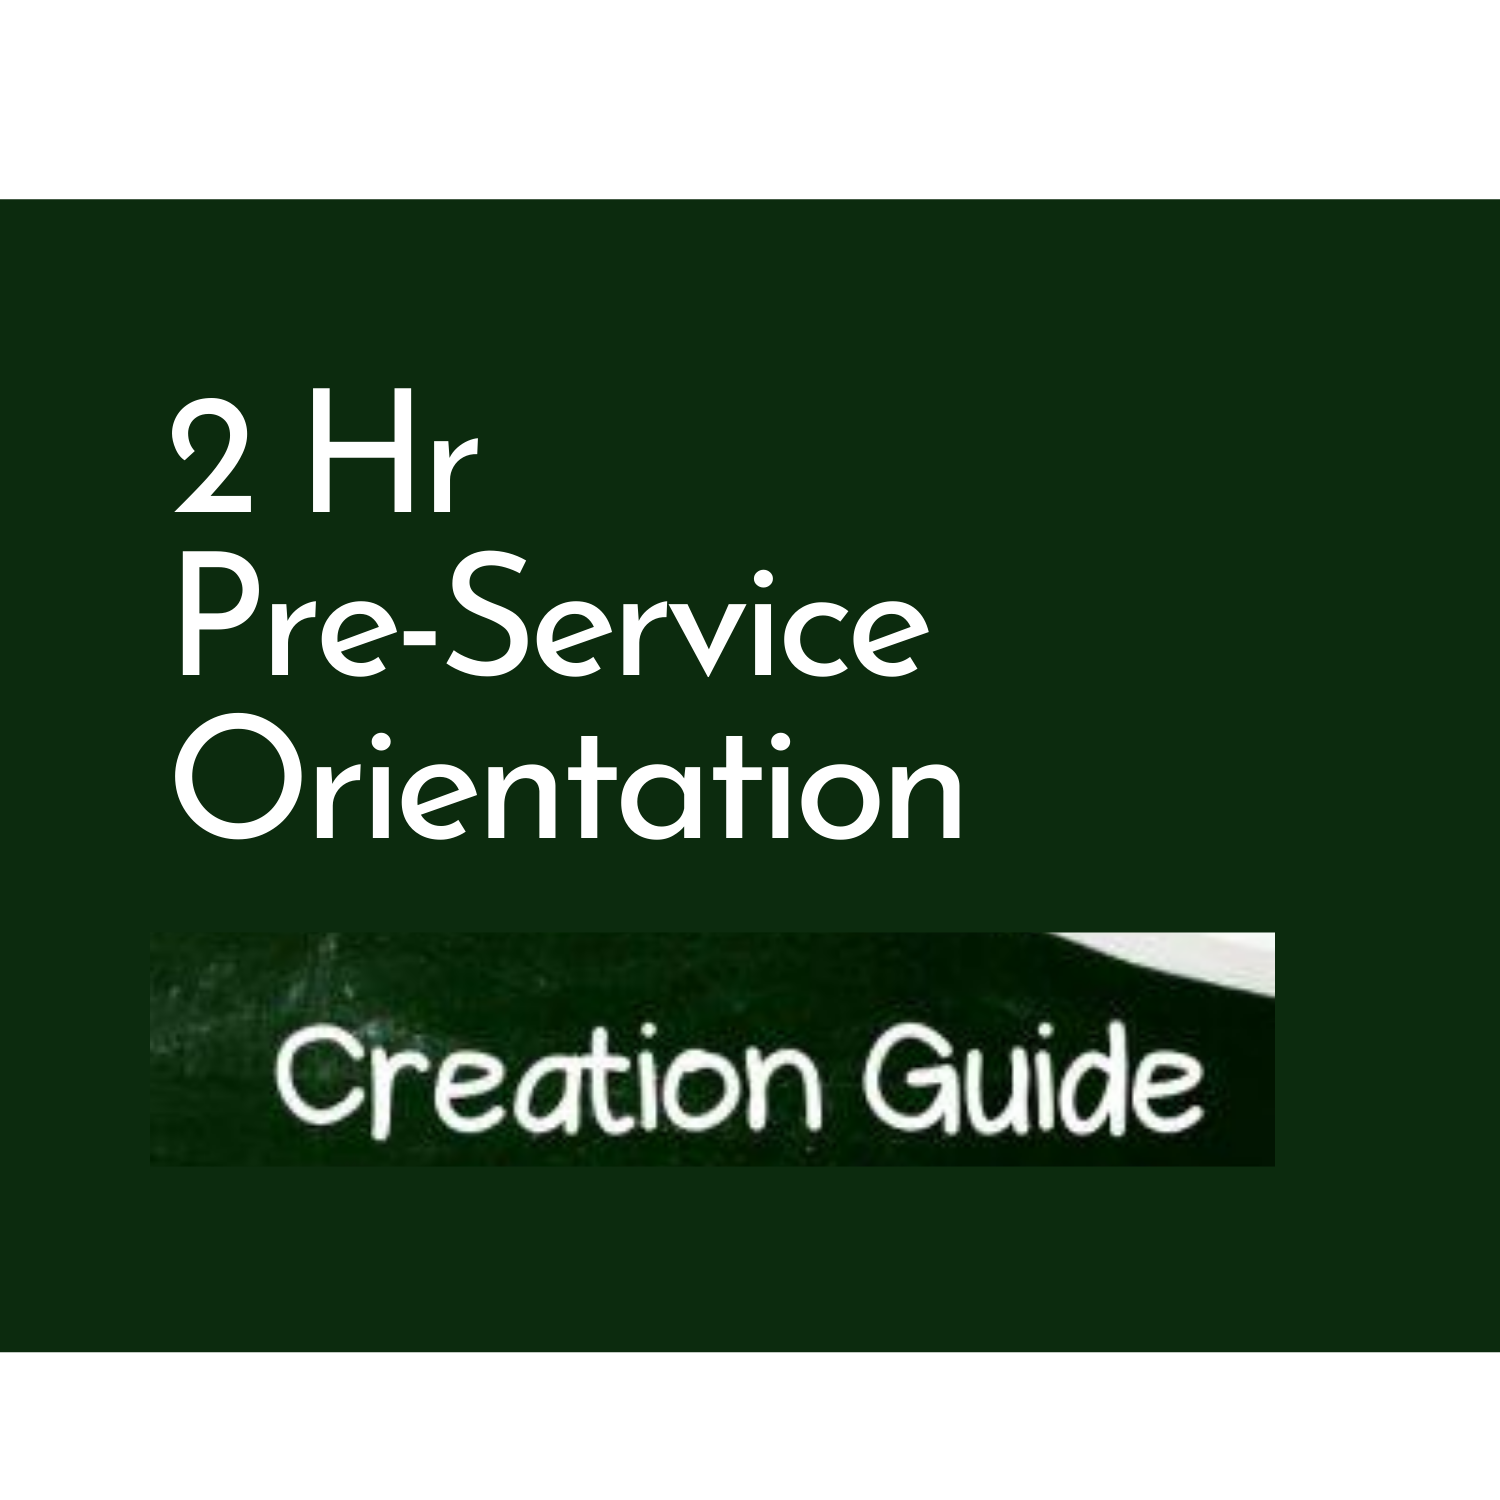 2 Hr Pre-Service Orientation